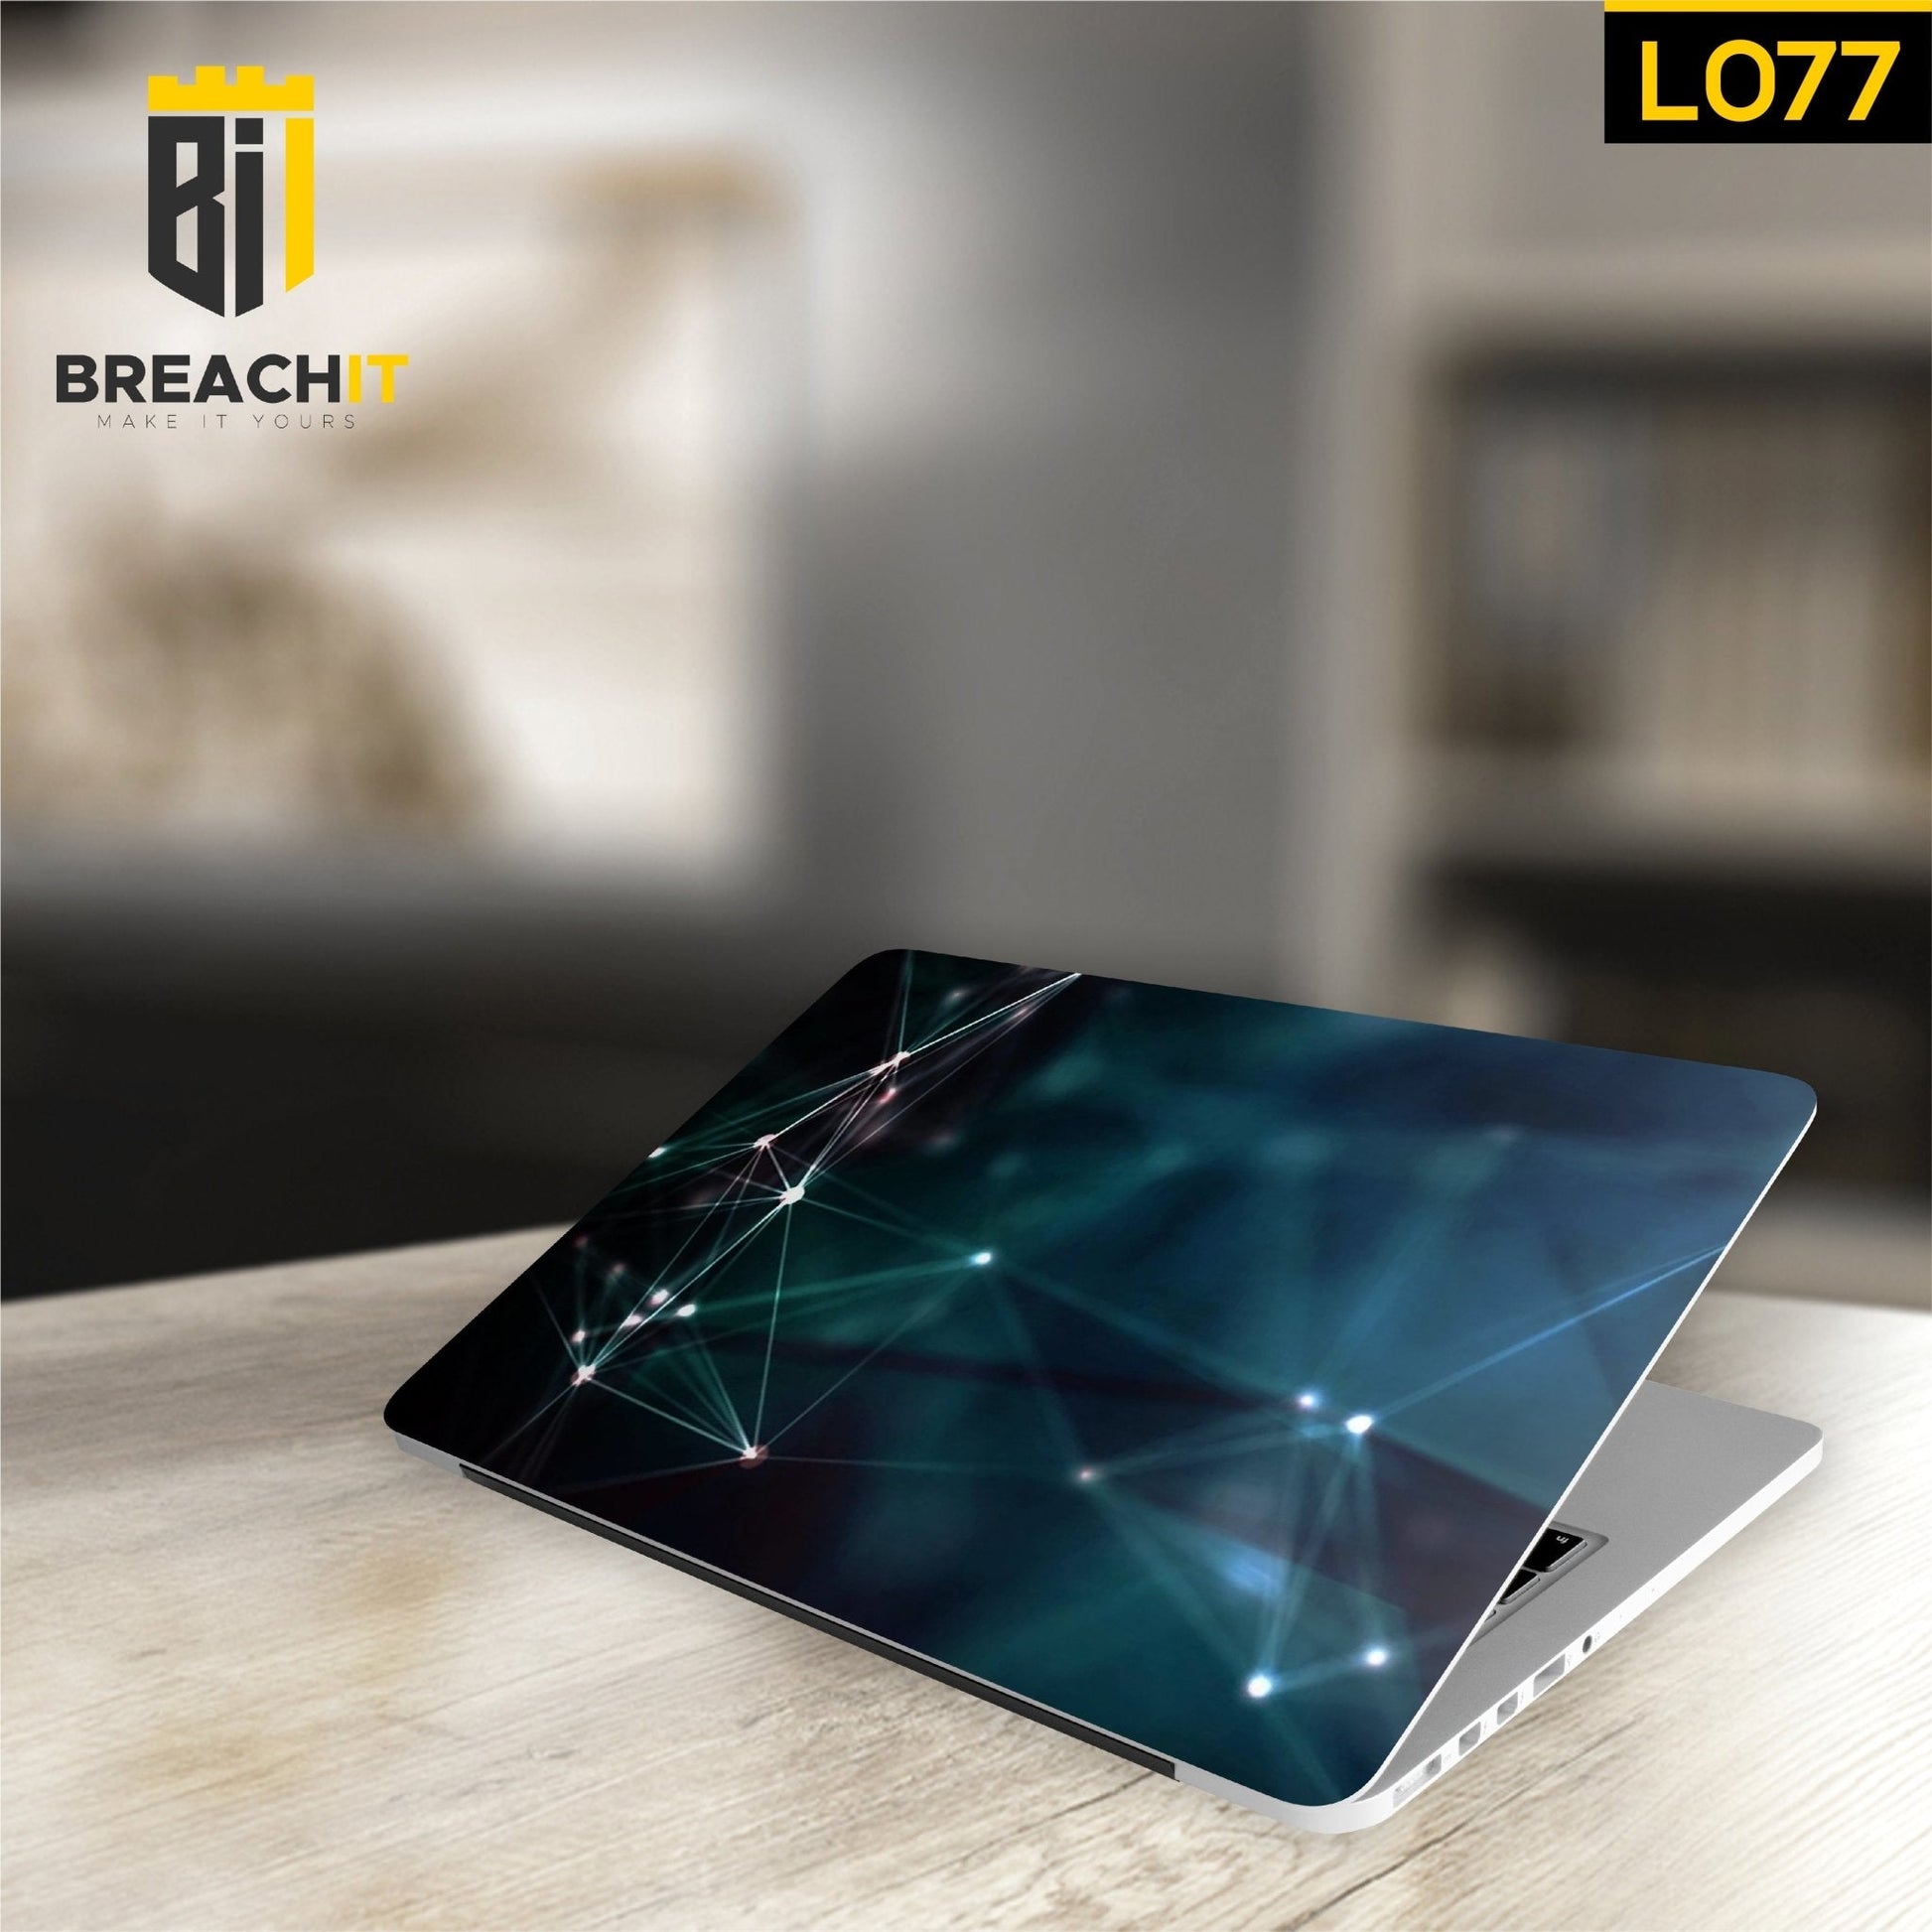 L077 Blue Laptop Skin - BREACHIT